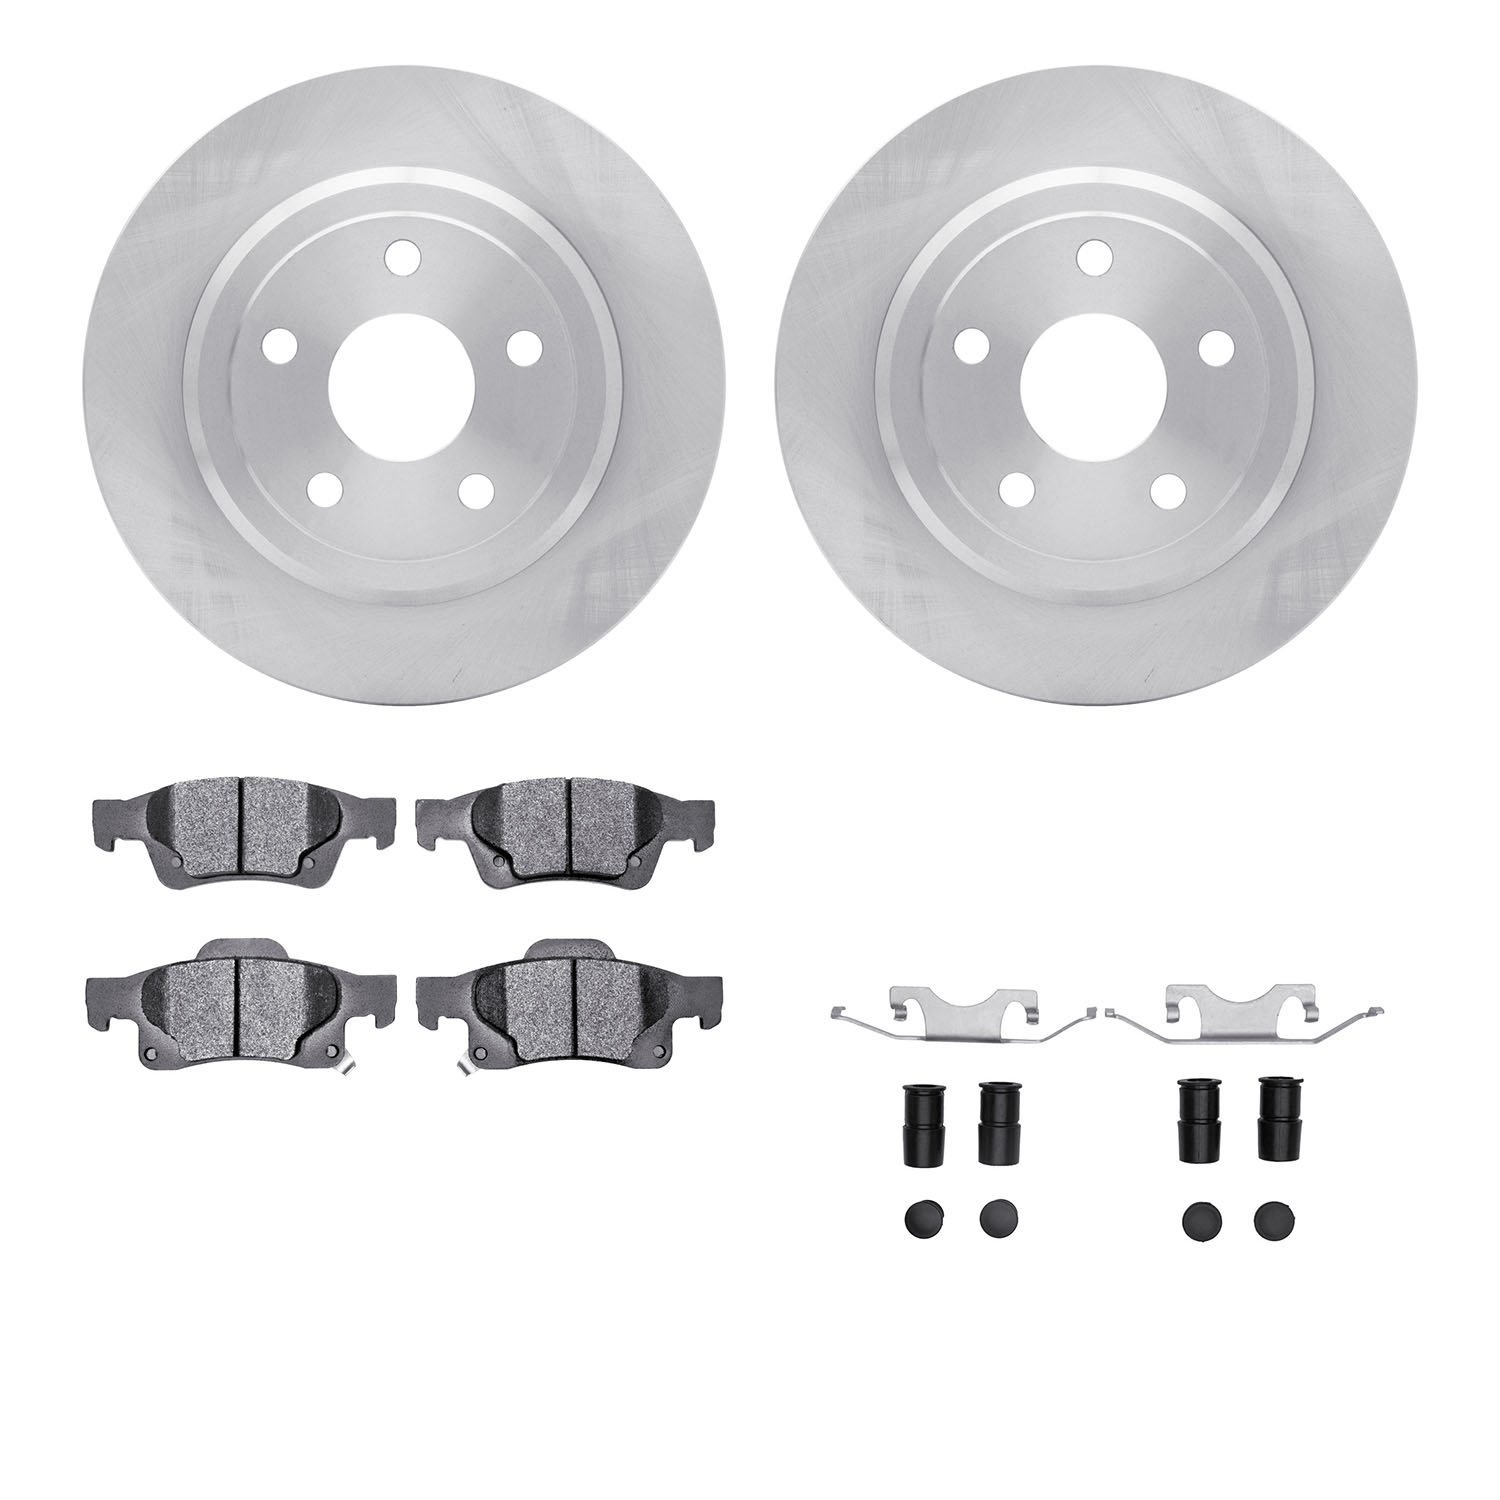 6412-42013 Brake Rotors with Ultimate-Duty Brake Pads Kit & Hardware, Fits Select Mopar, Position: Rear